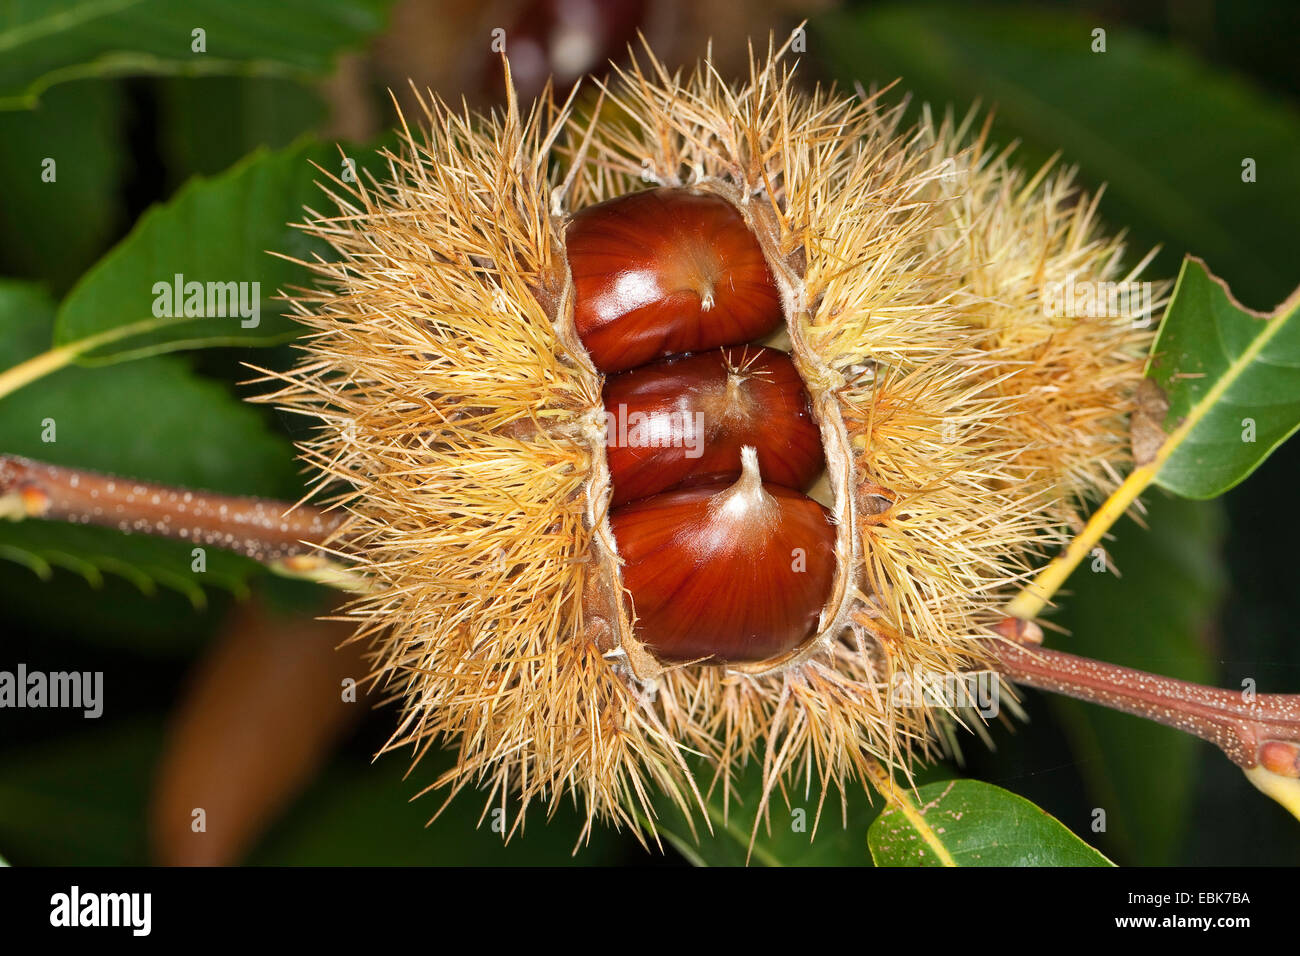 Spanish chestnut, sweet chestnut (Castanea sativa), fruits on a tree Stock Photo